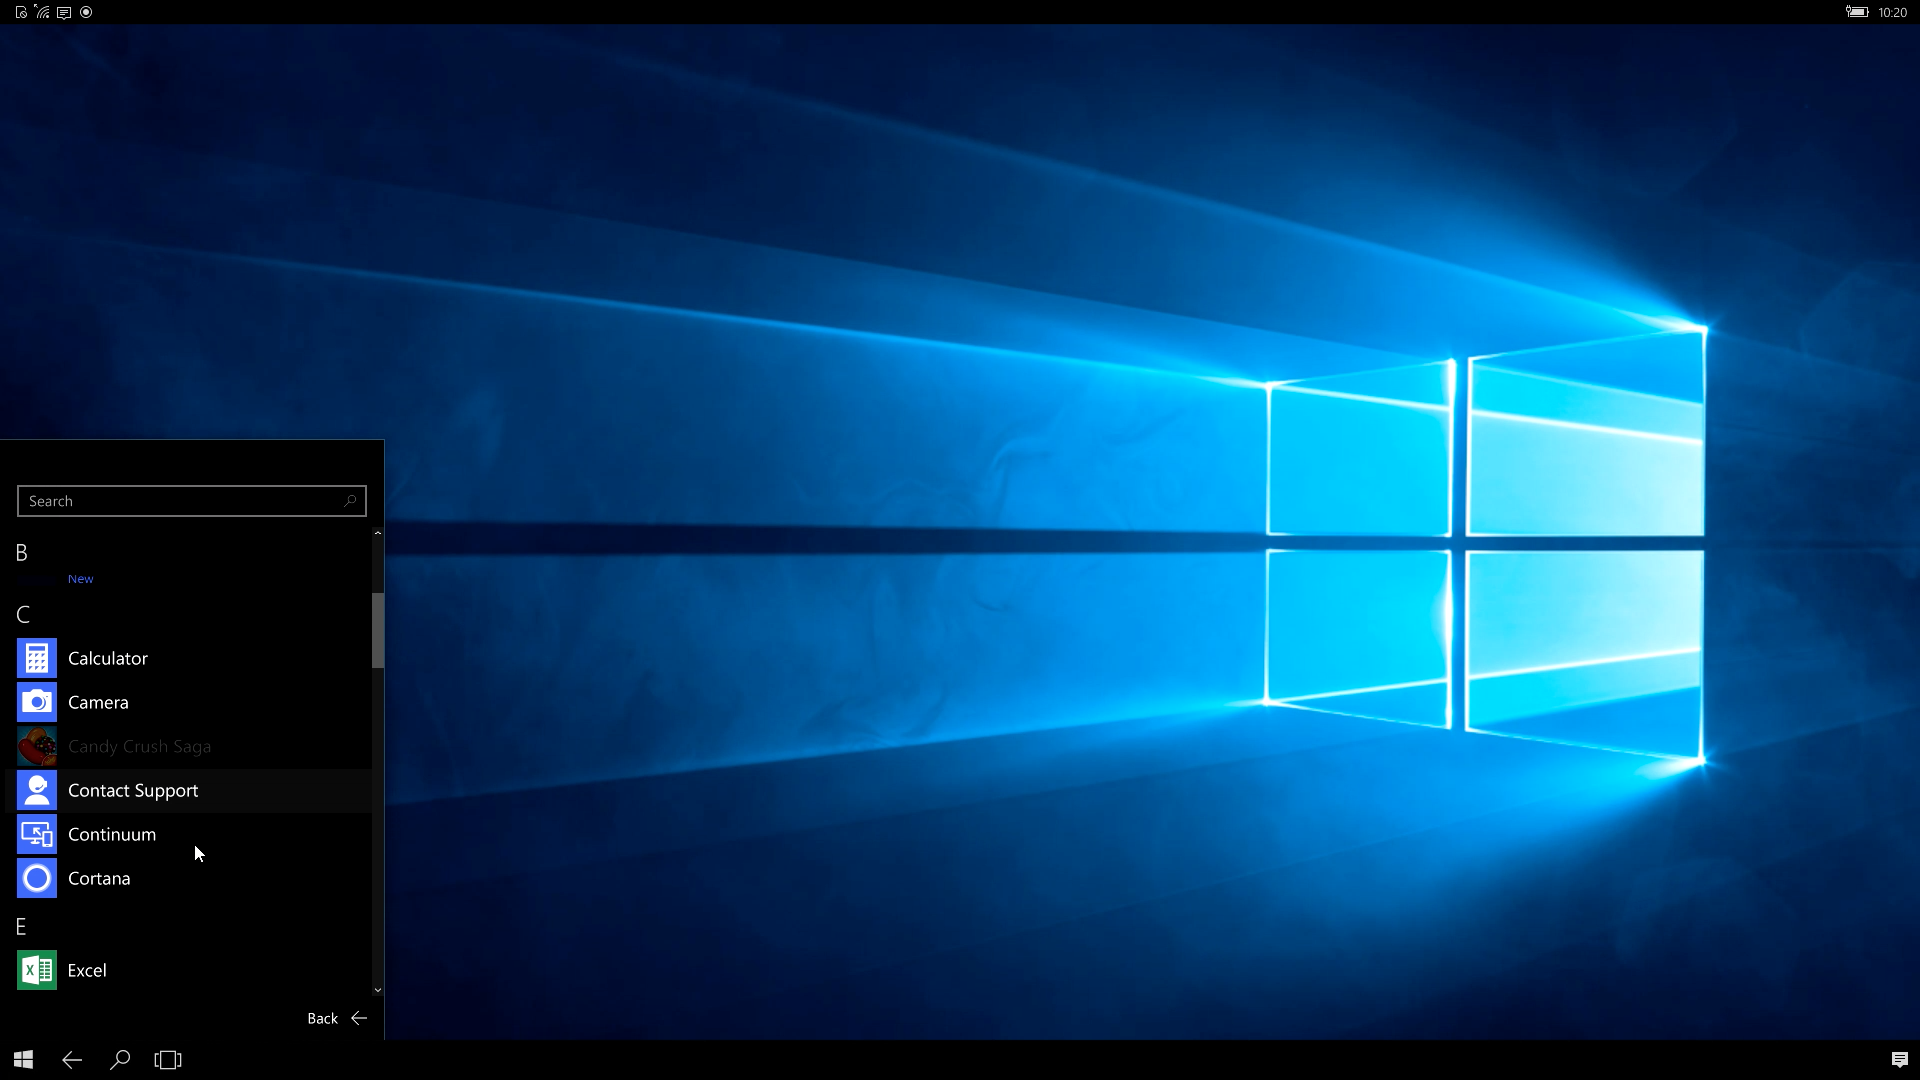 Windows 10 melewati ambang kunci sebagai Windows 7 dwindle